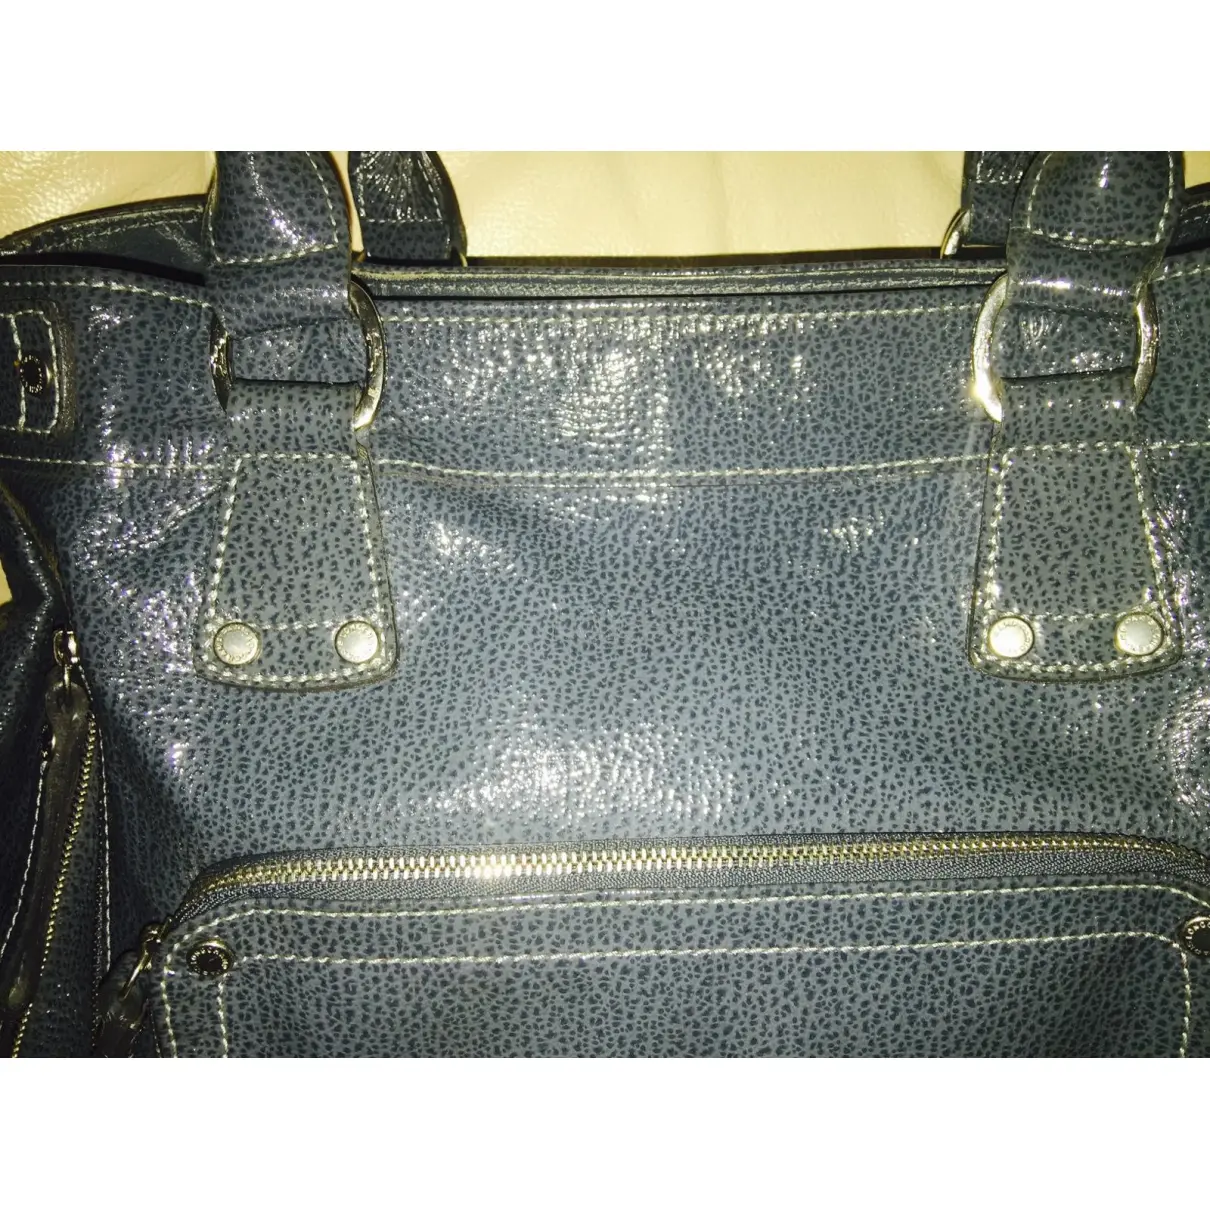 Longchamp Idole patent leather handbag for sale